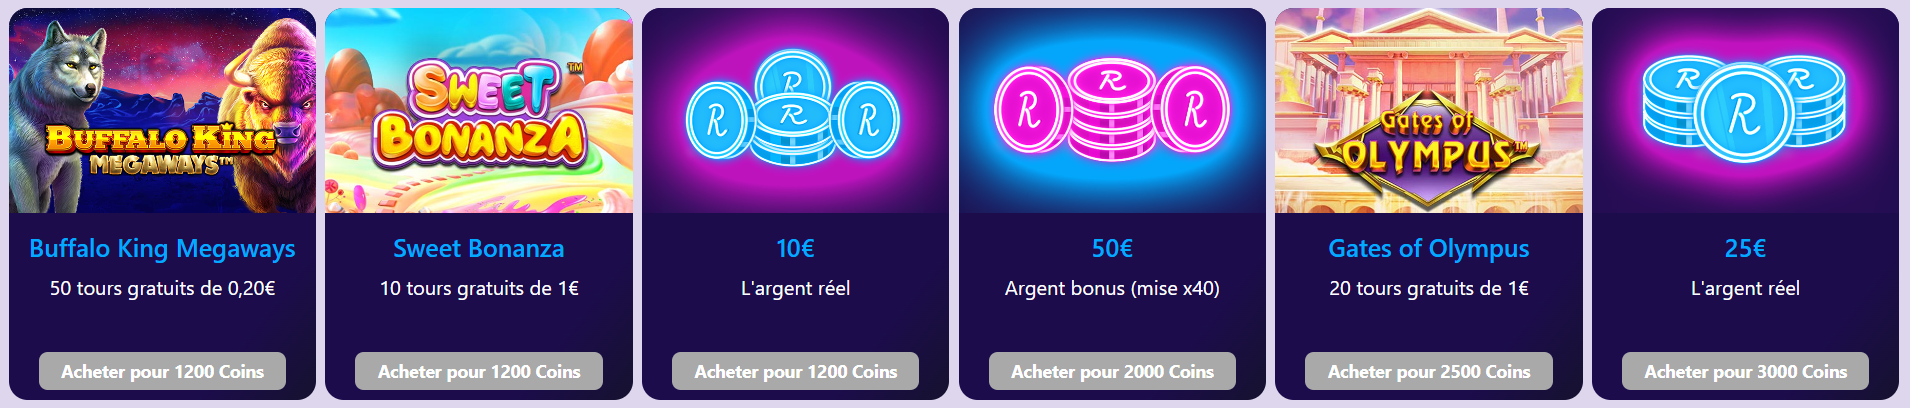 RA Casino bonus